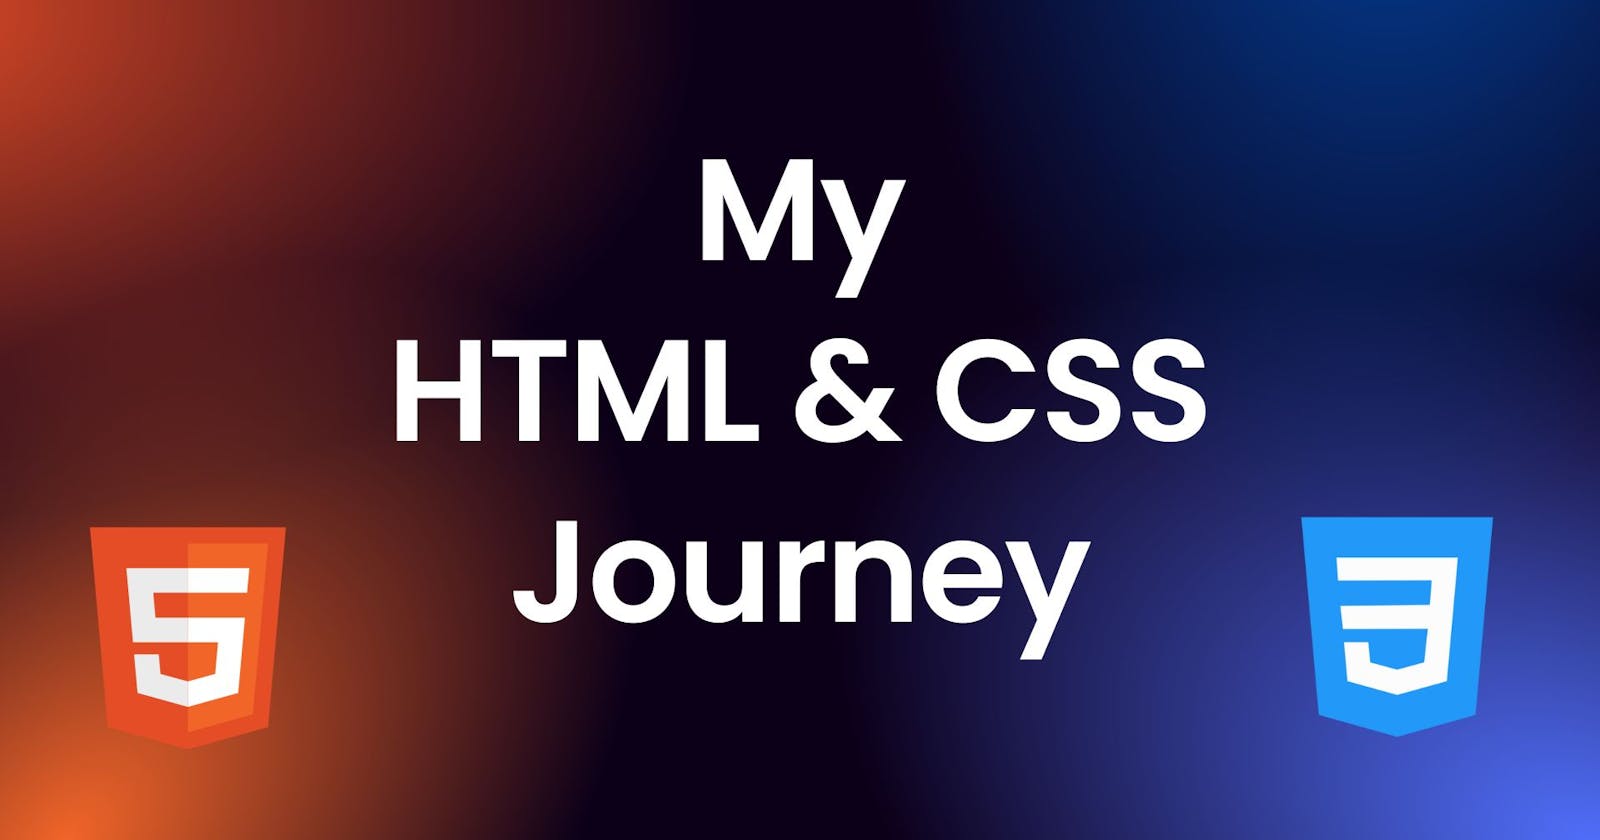 My HTML & CSS Journey